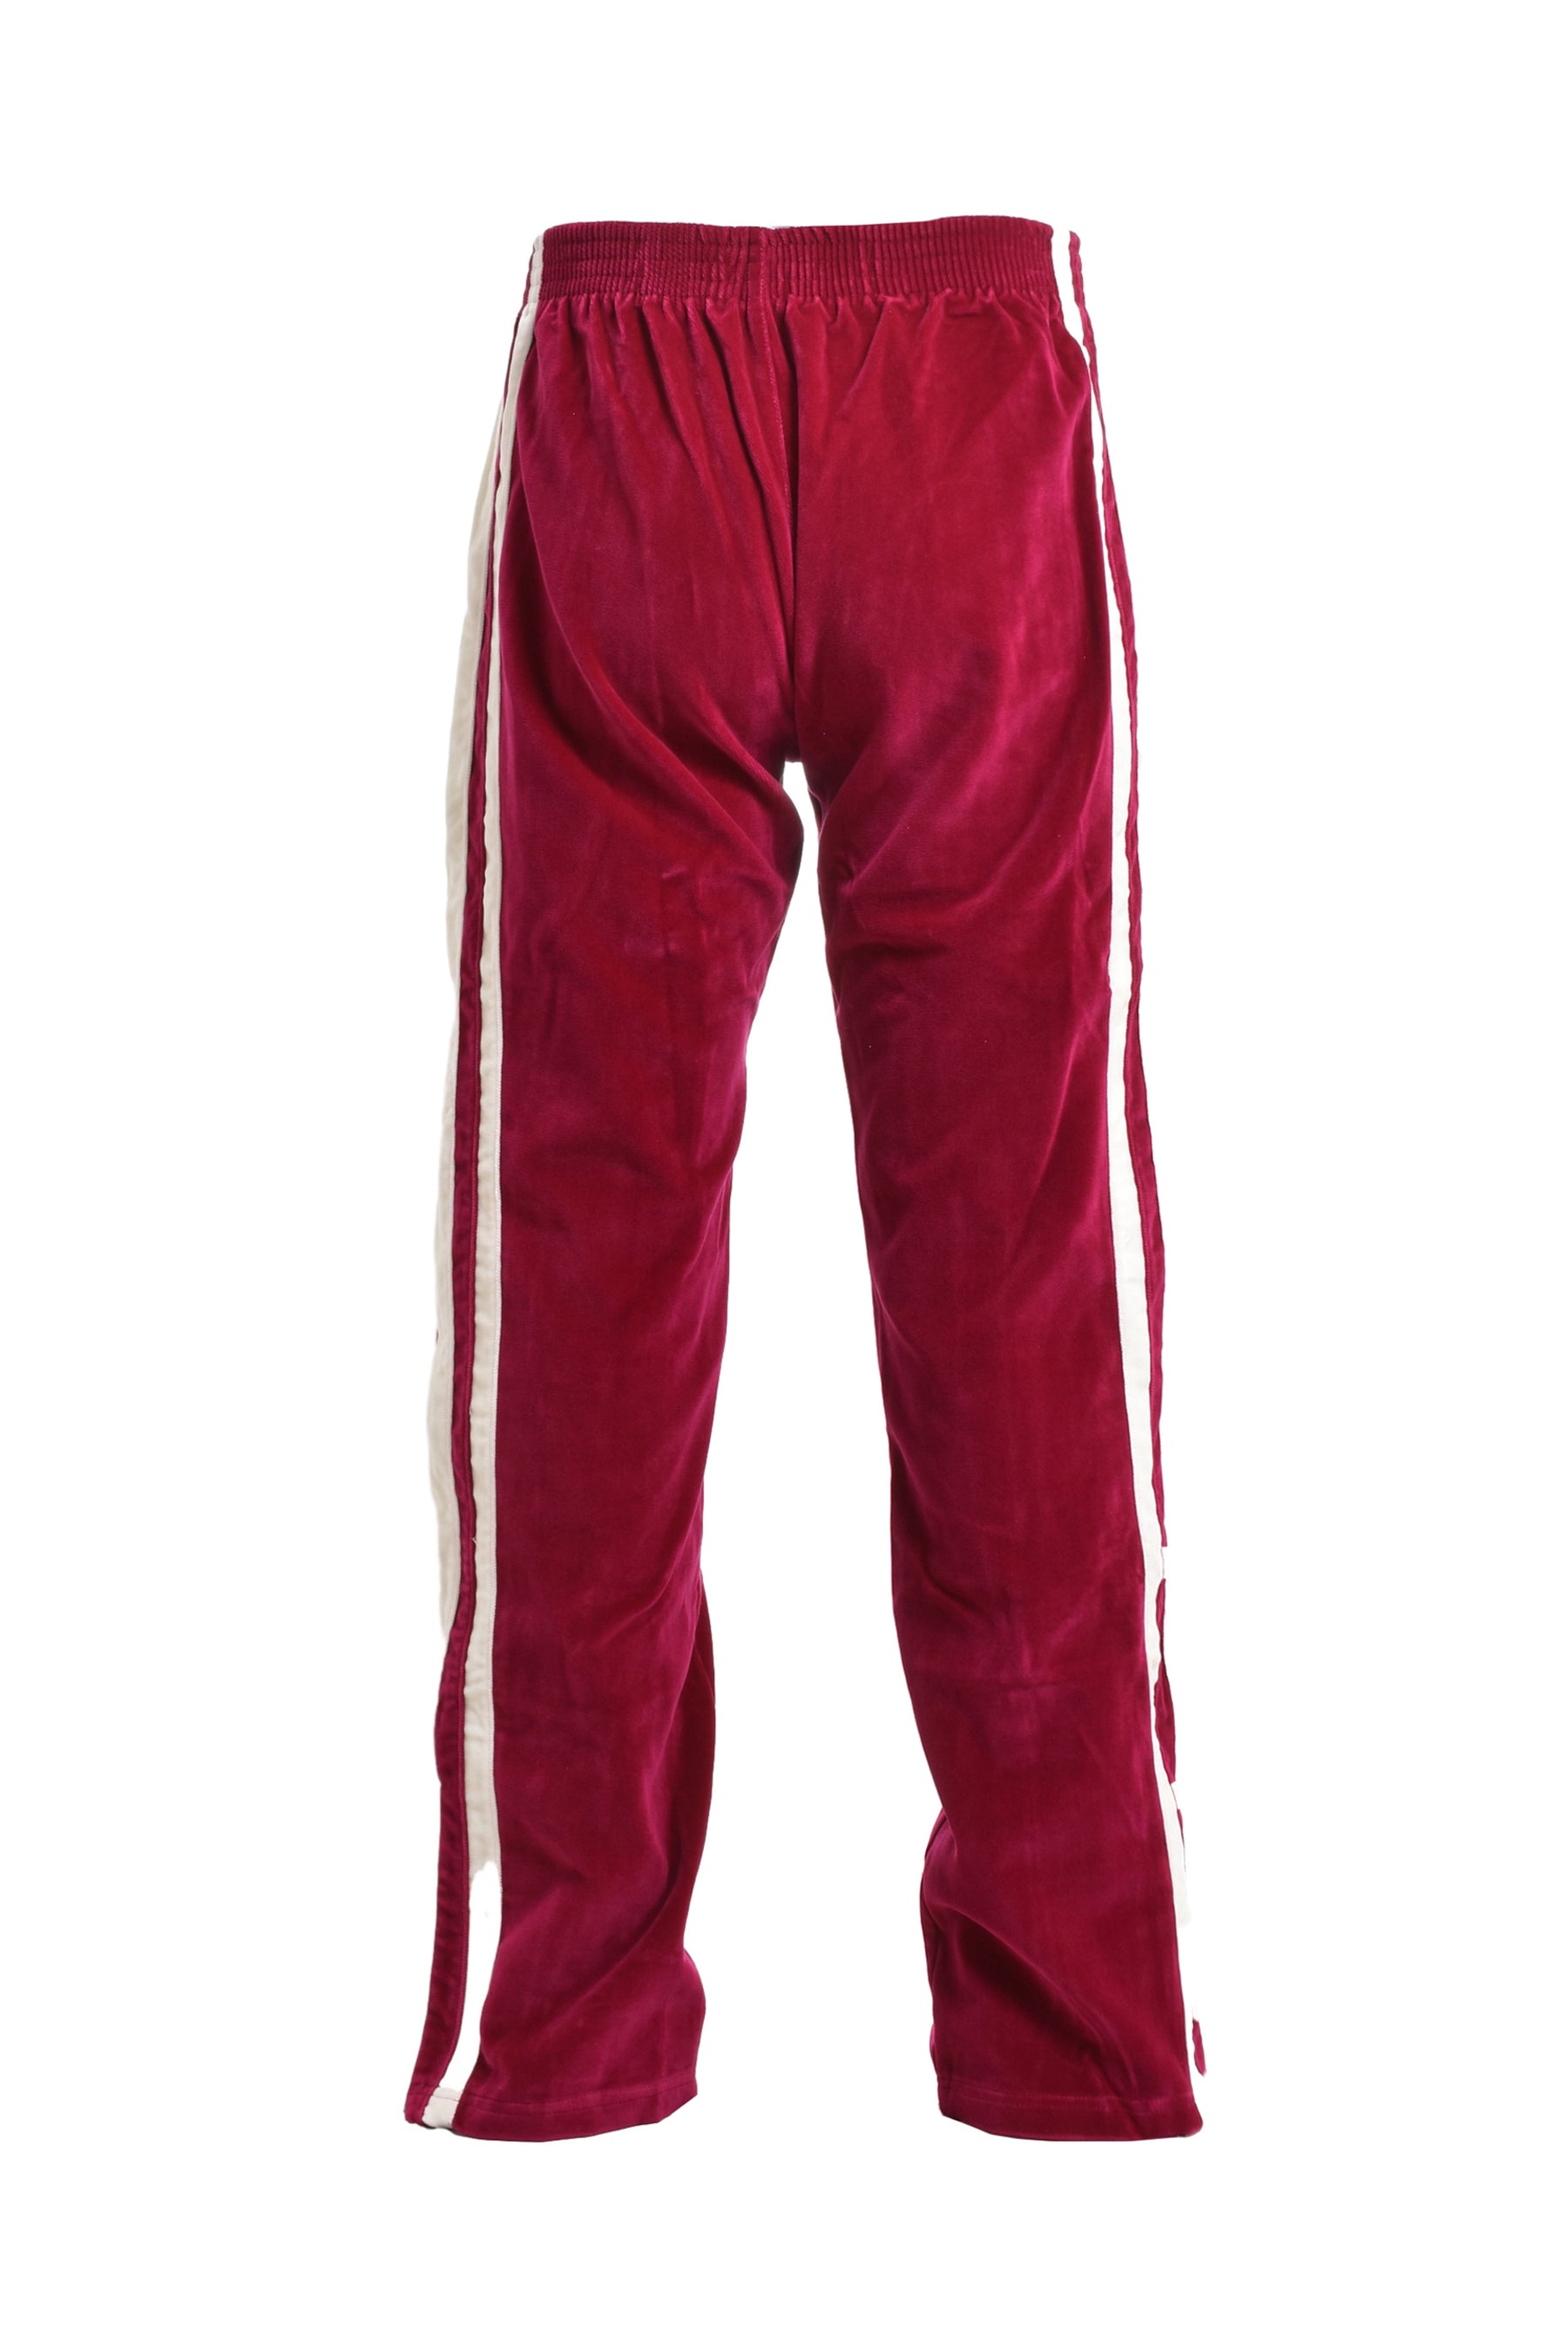 Spring Autumn Men's Cotton Sweatpants Baggy Joggers Streetwear Ankle Length Track  Pants Casual Loose Sweats Plus